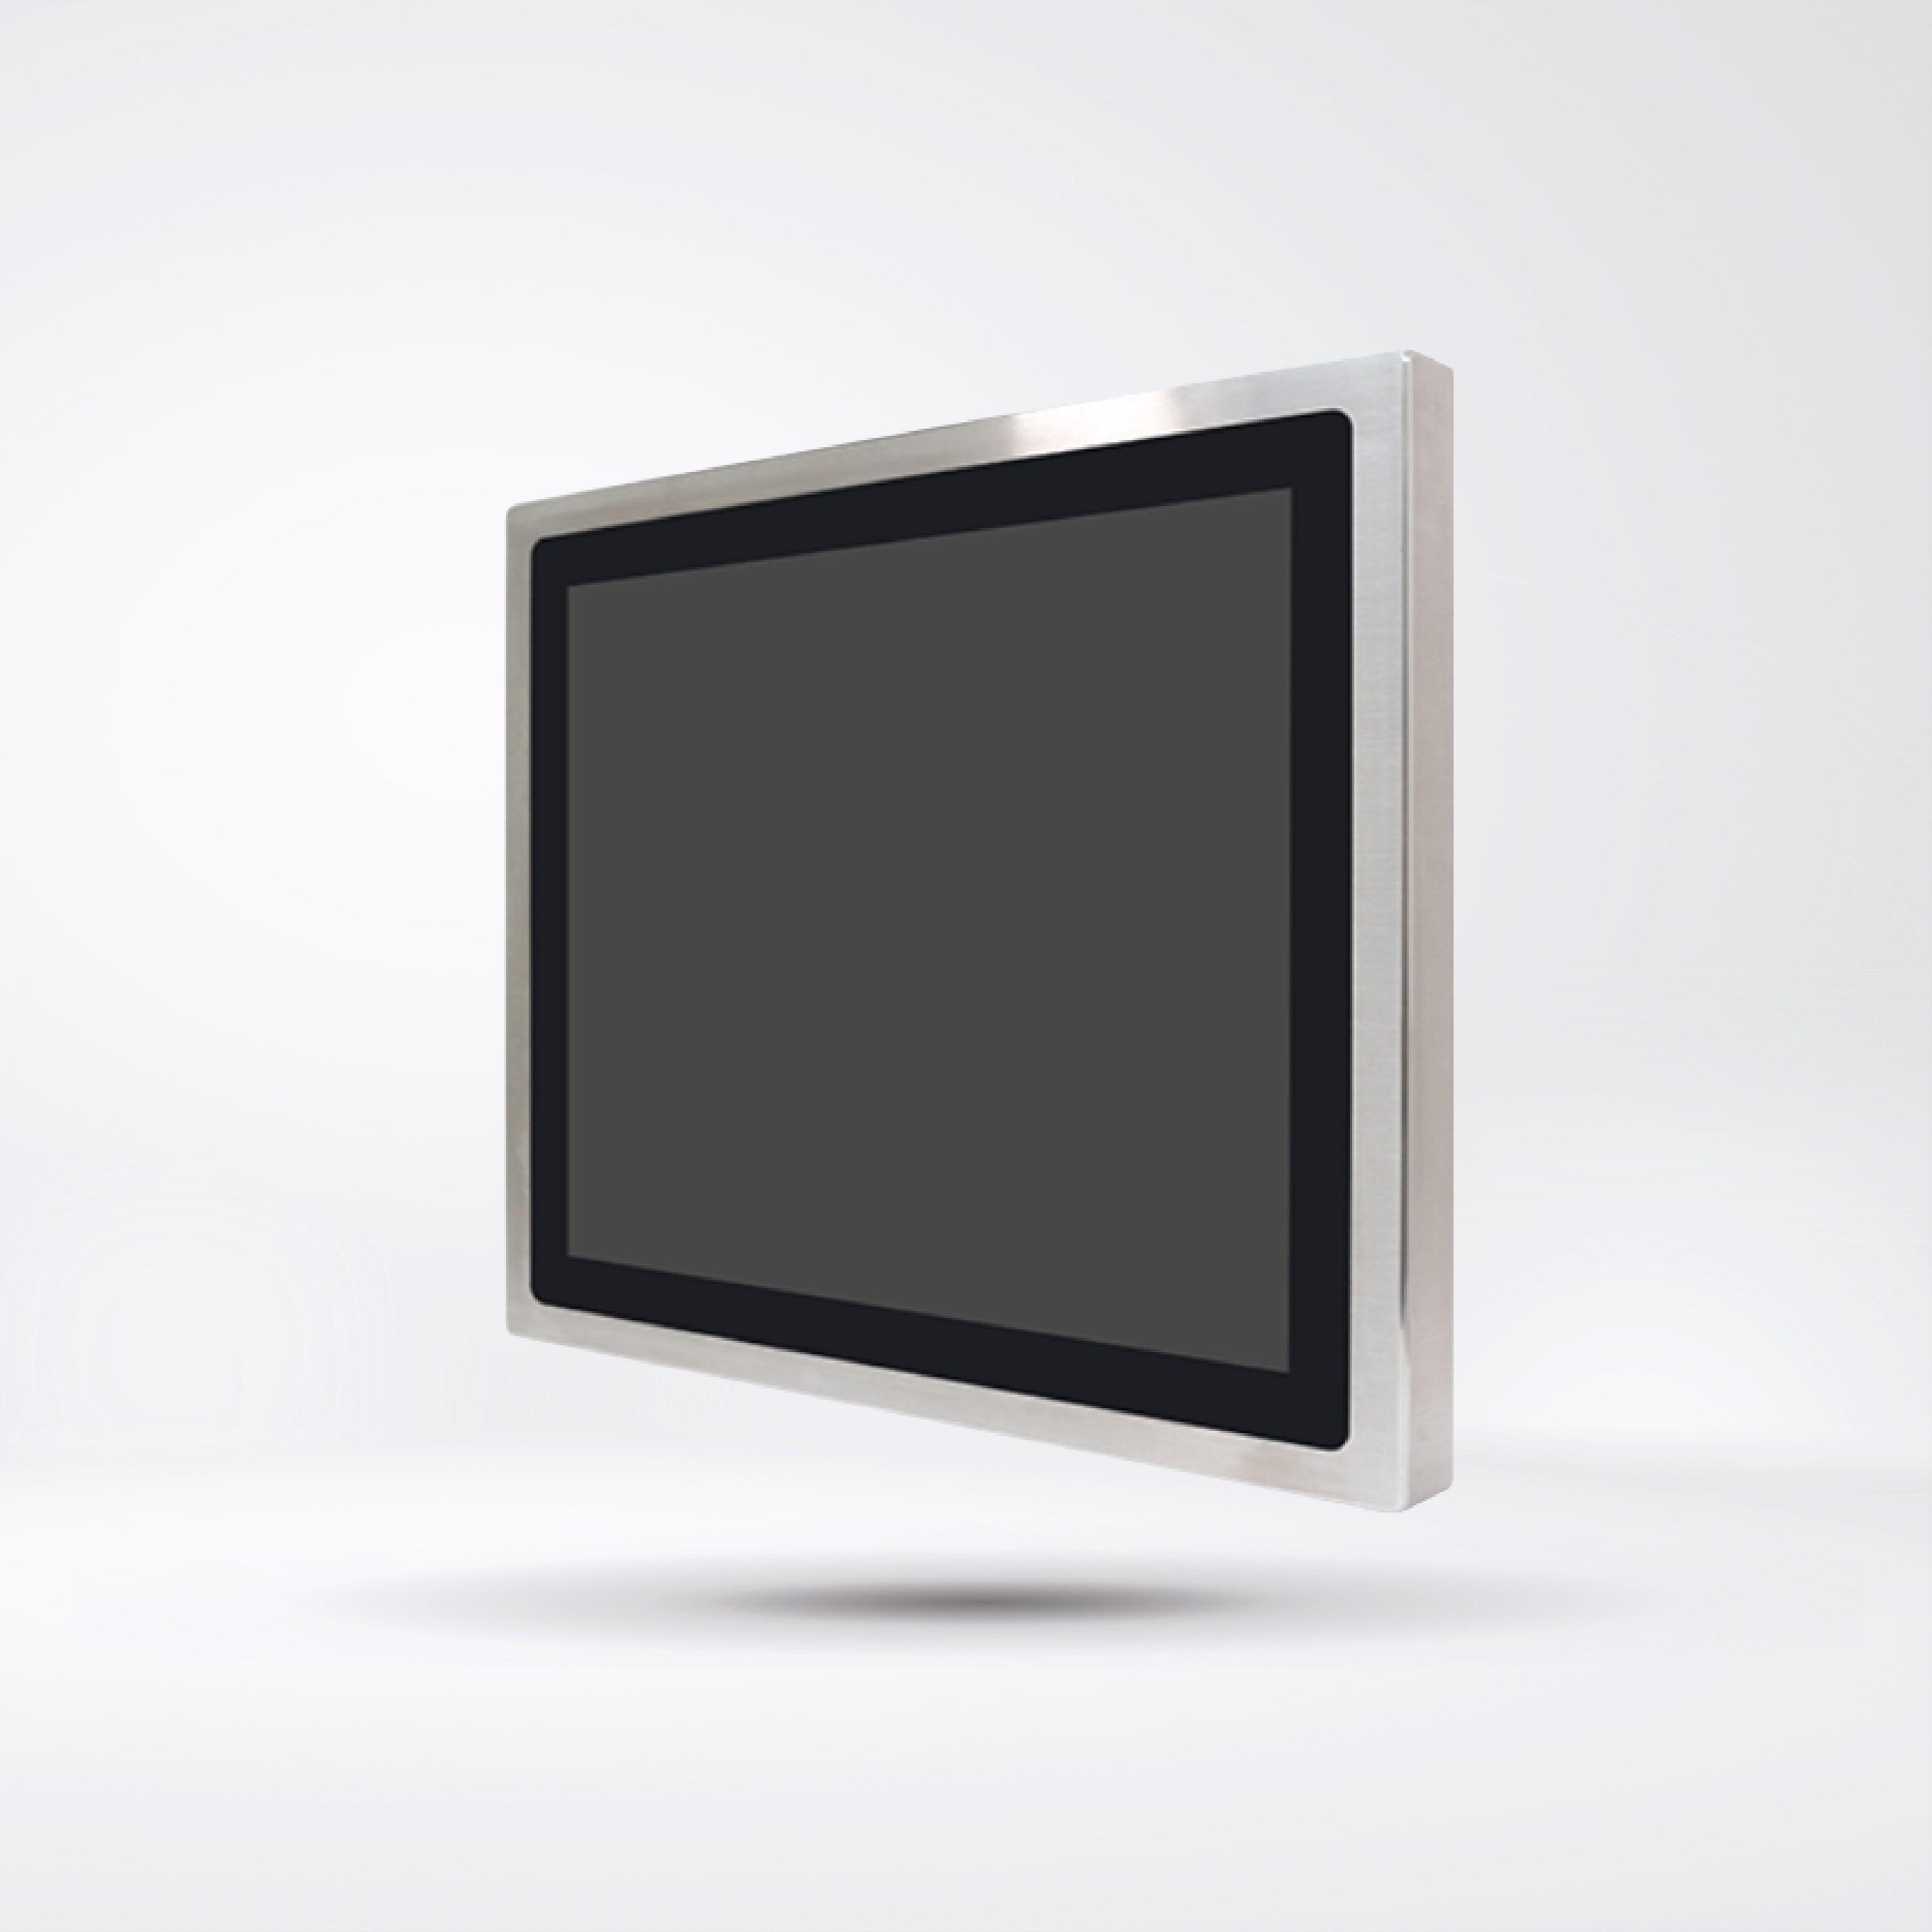 AEx-819PH 19” Intel Celeron N2930 IP66 Stainless Steel Panel PC, Luminance : 1,000 (cd/m²) - Riverplus